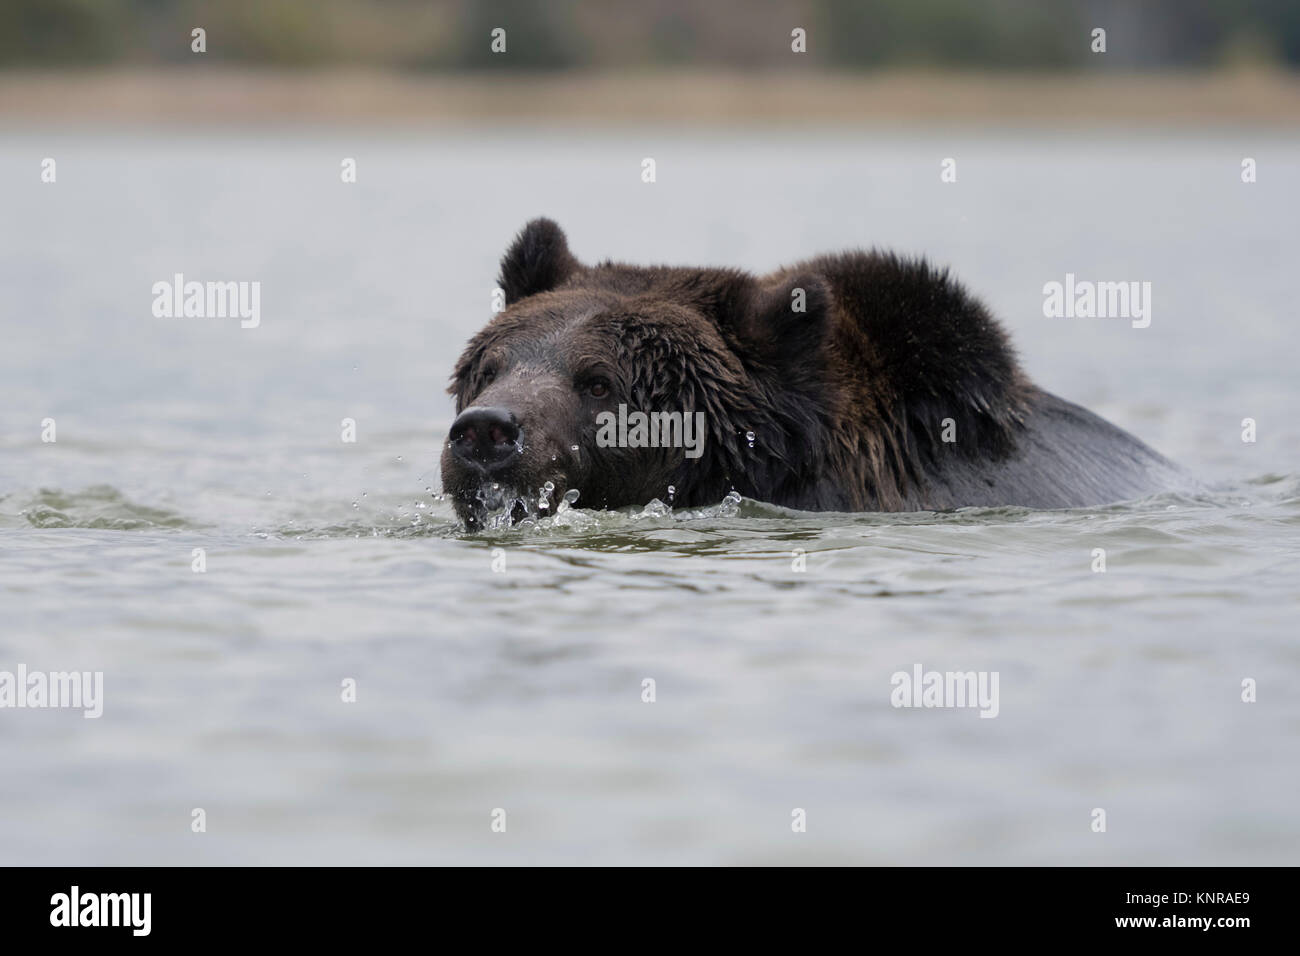 Unione orso bruno / Europaeischer Braunbaer ( Ursus arctos ) nuoto, balneazione, giocare in acqua in un lago. Foto Stock